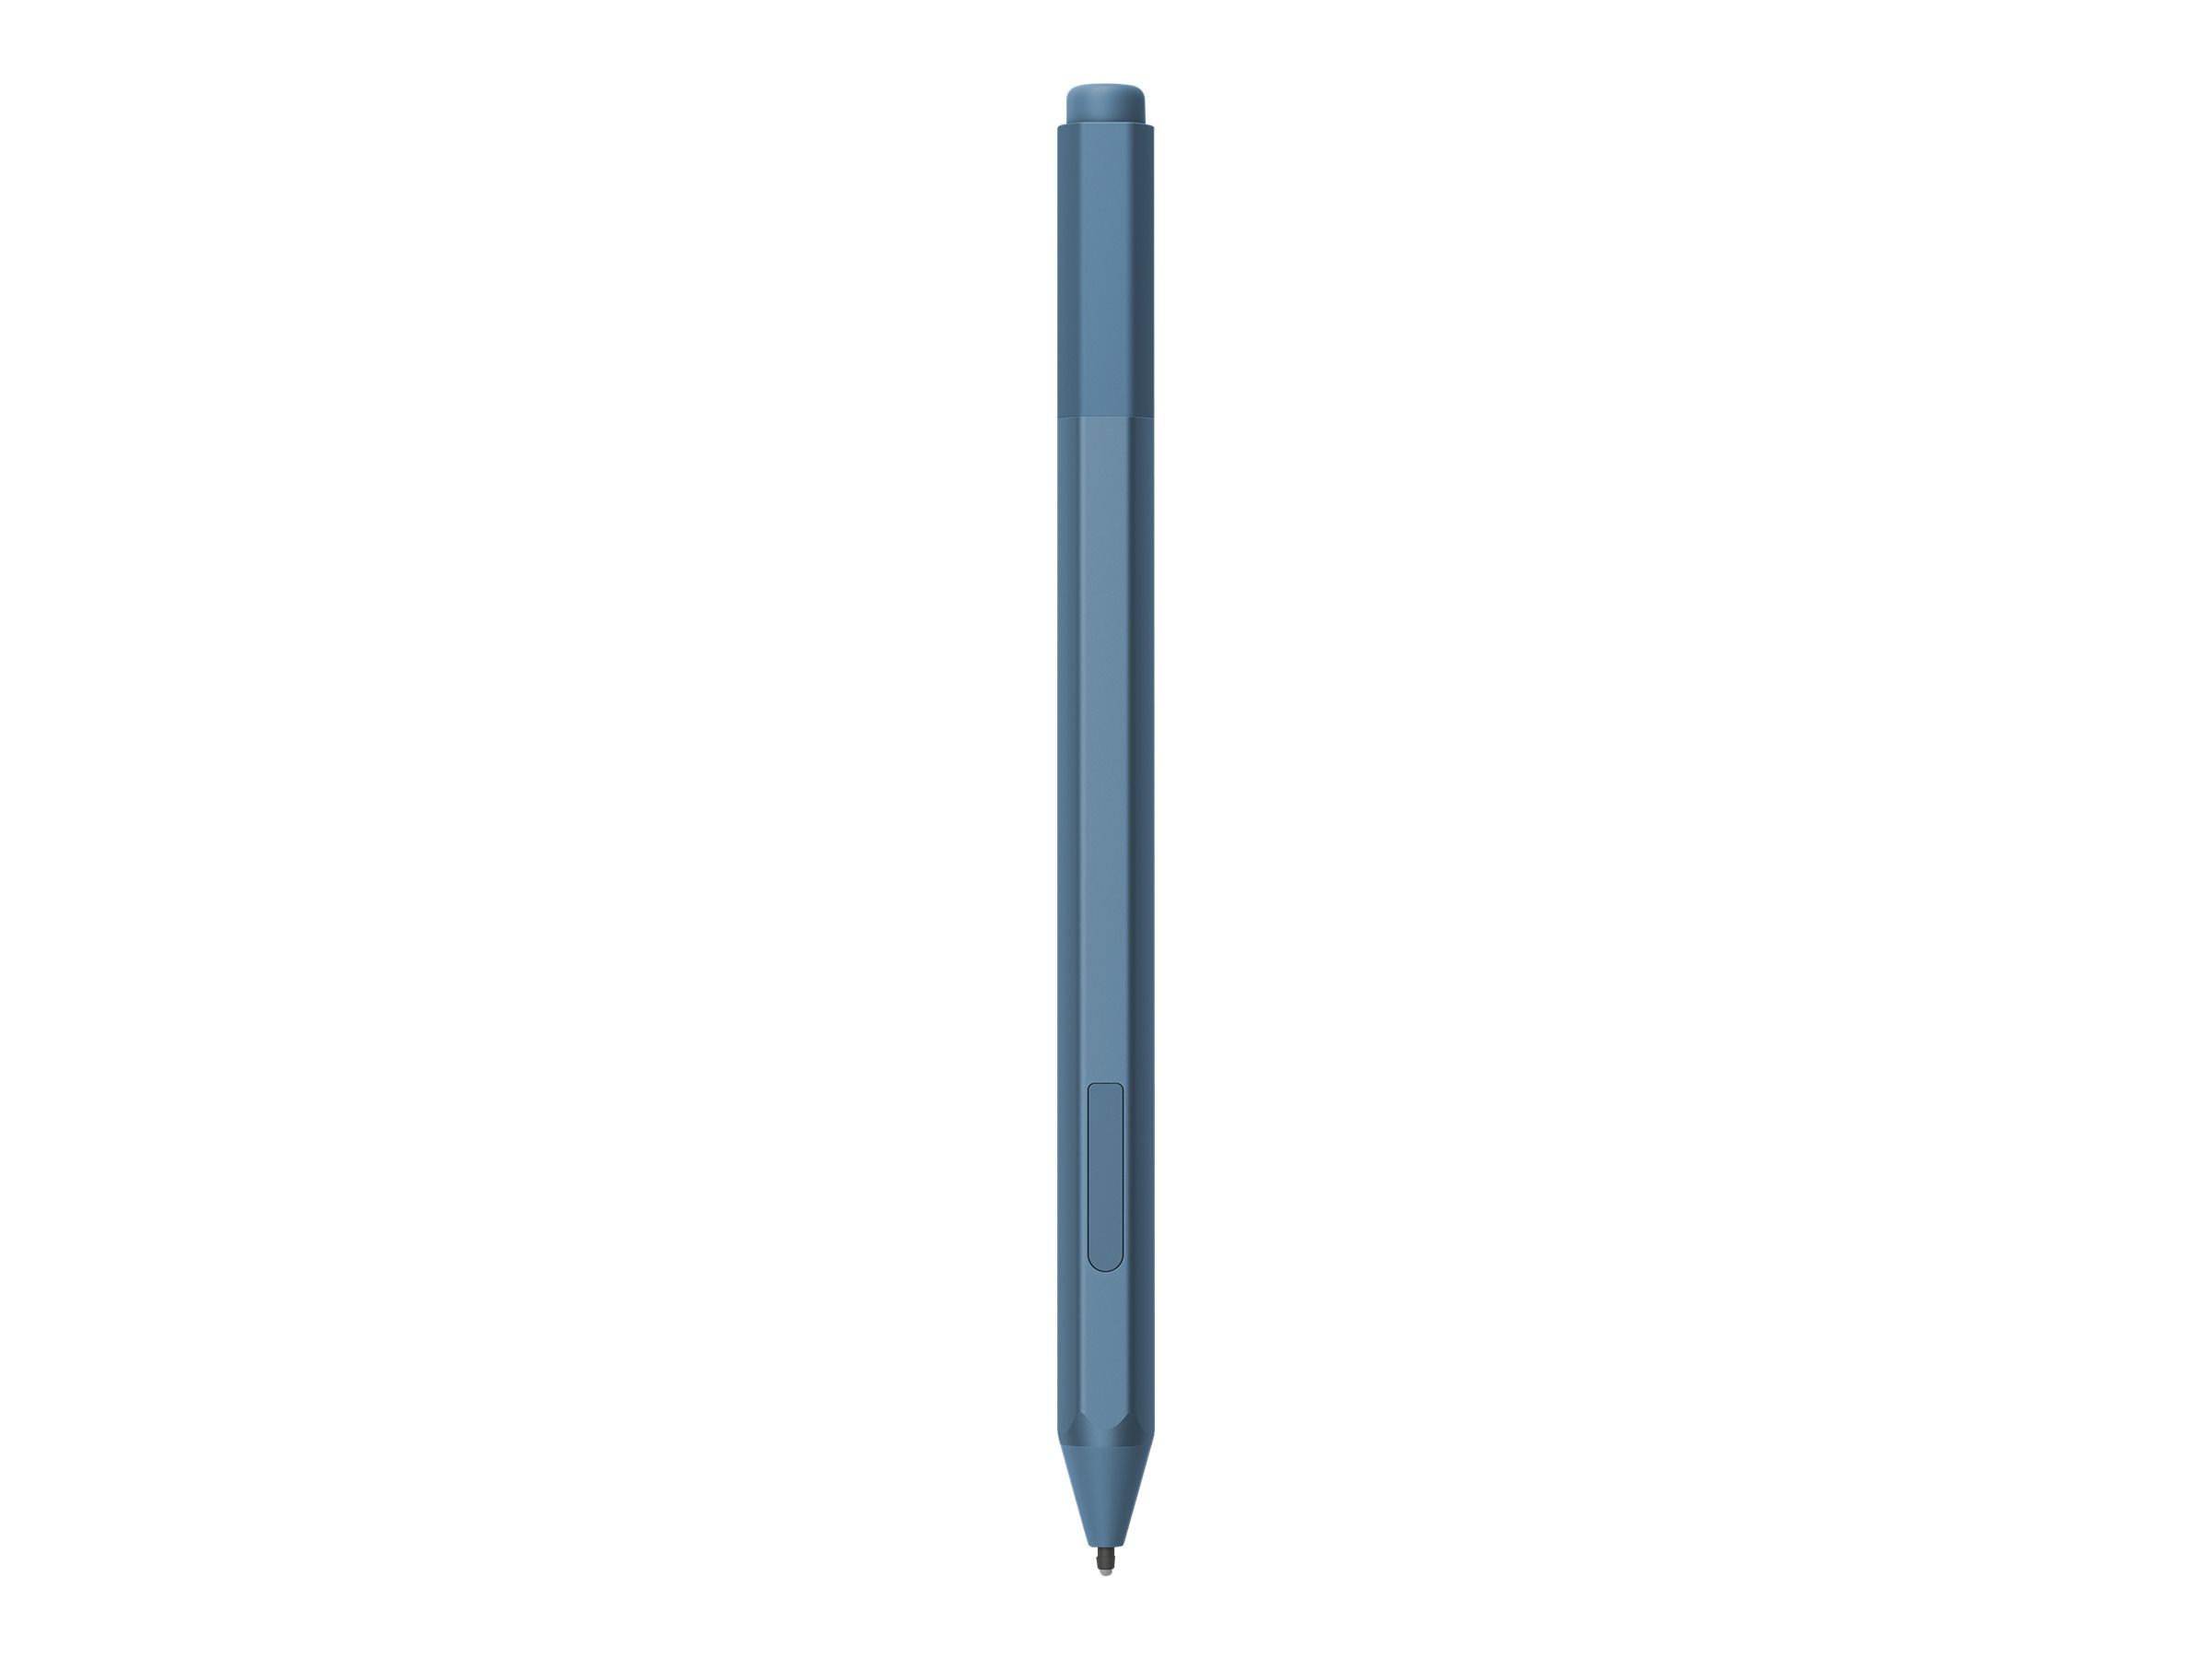 Microsoft Surface Pen M1776 - Stylet actif - 2 boutons - Bluetooth 4.0 - bleu iceberg - commercial - pour Surface Go 3 - EYV-00050 - Dispositifs de pointage